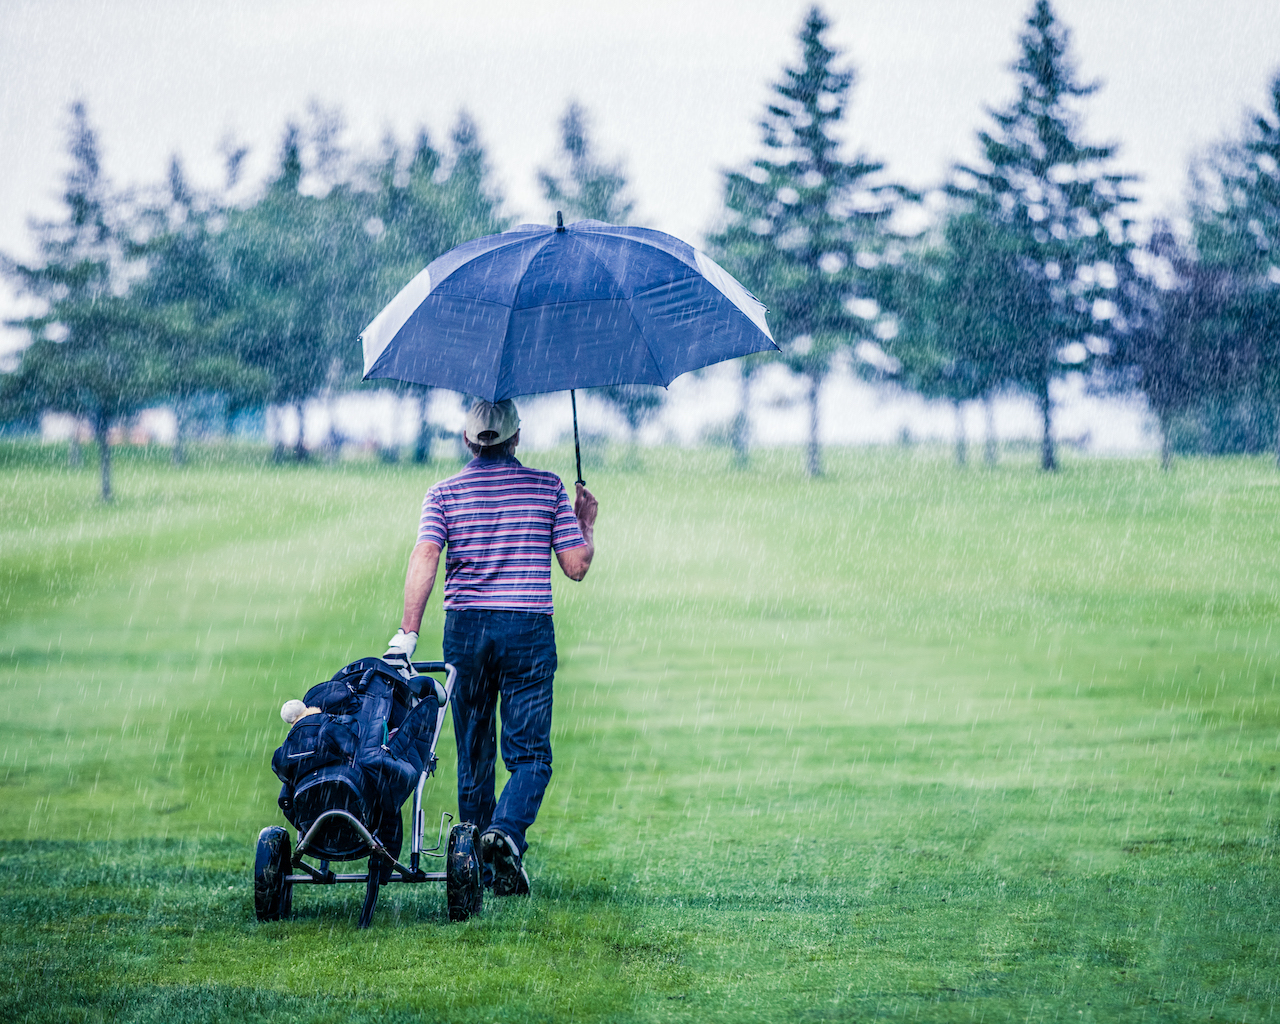 Golfer with umbrella in rain